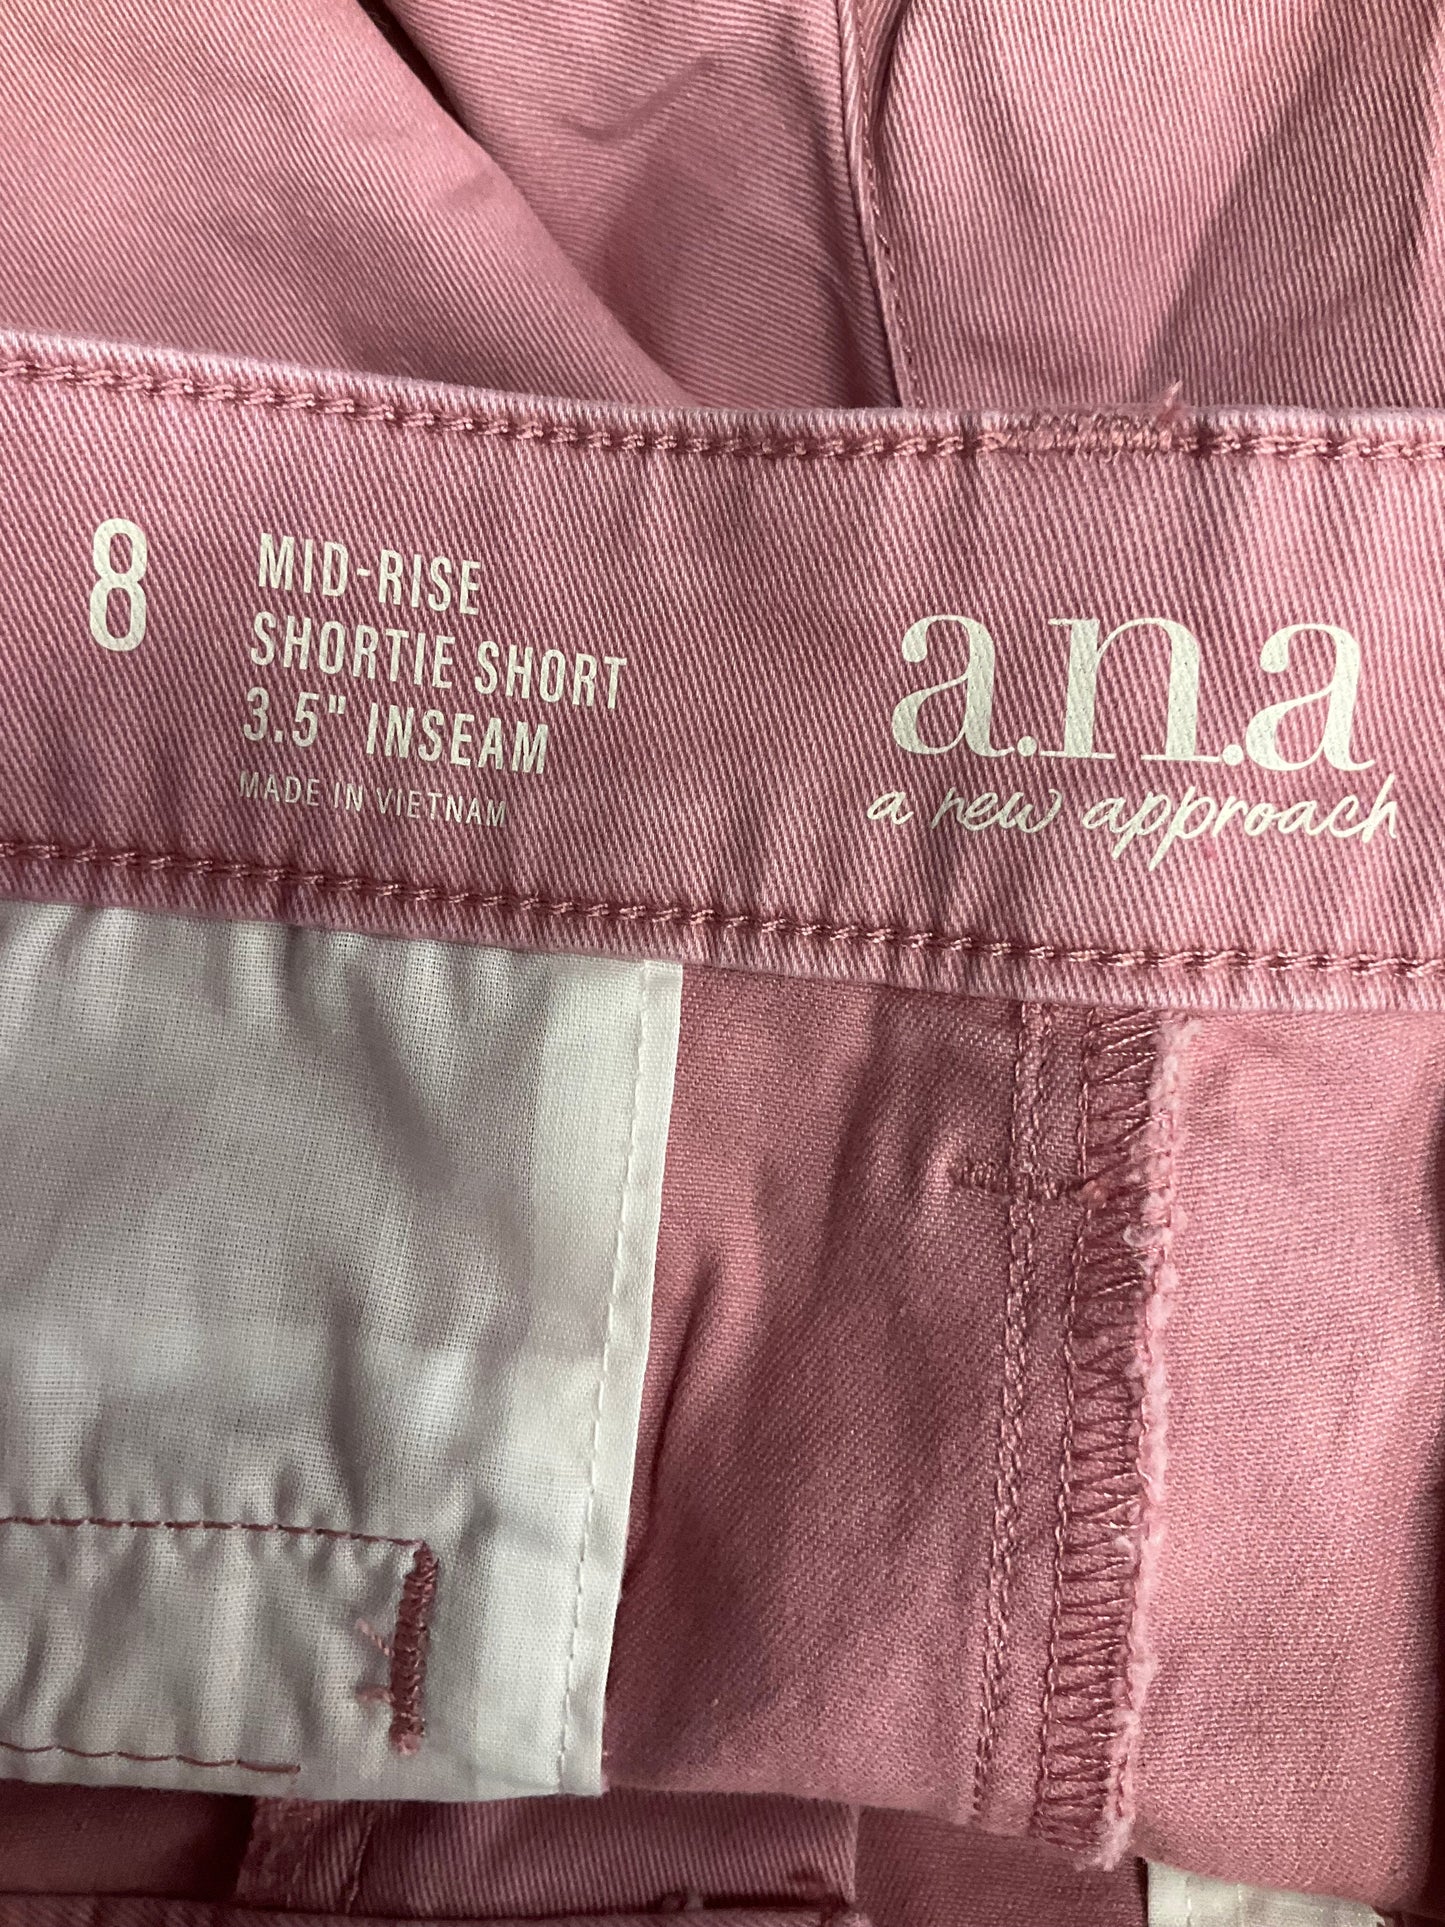 Pink Shorts Ana, Size 8